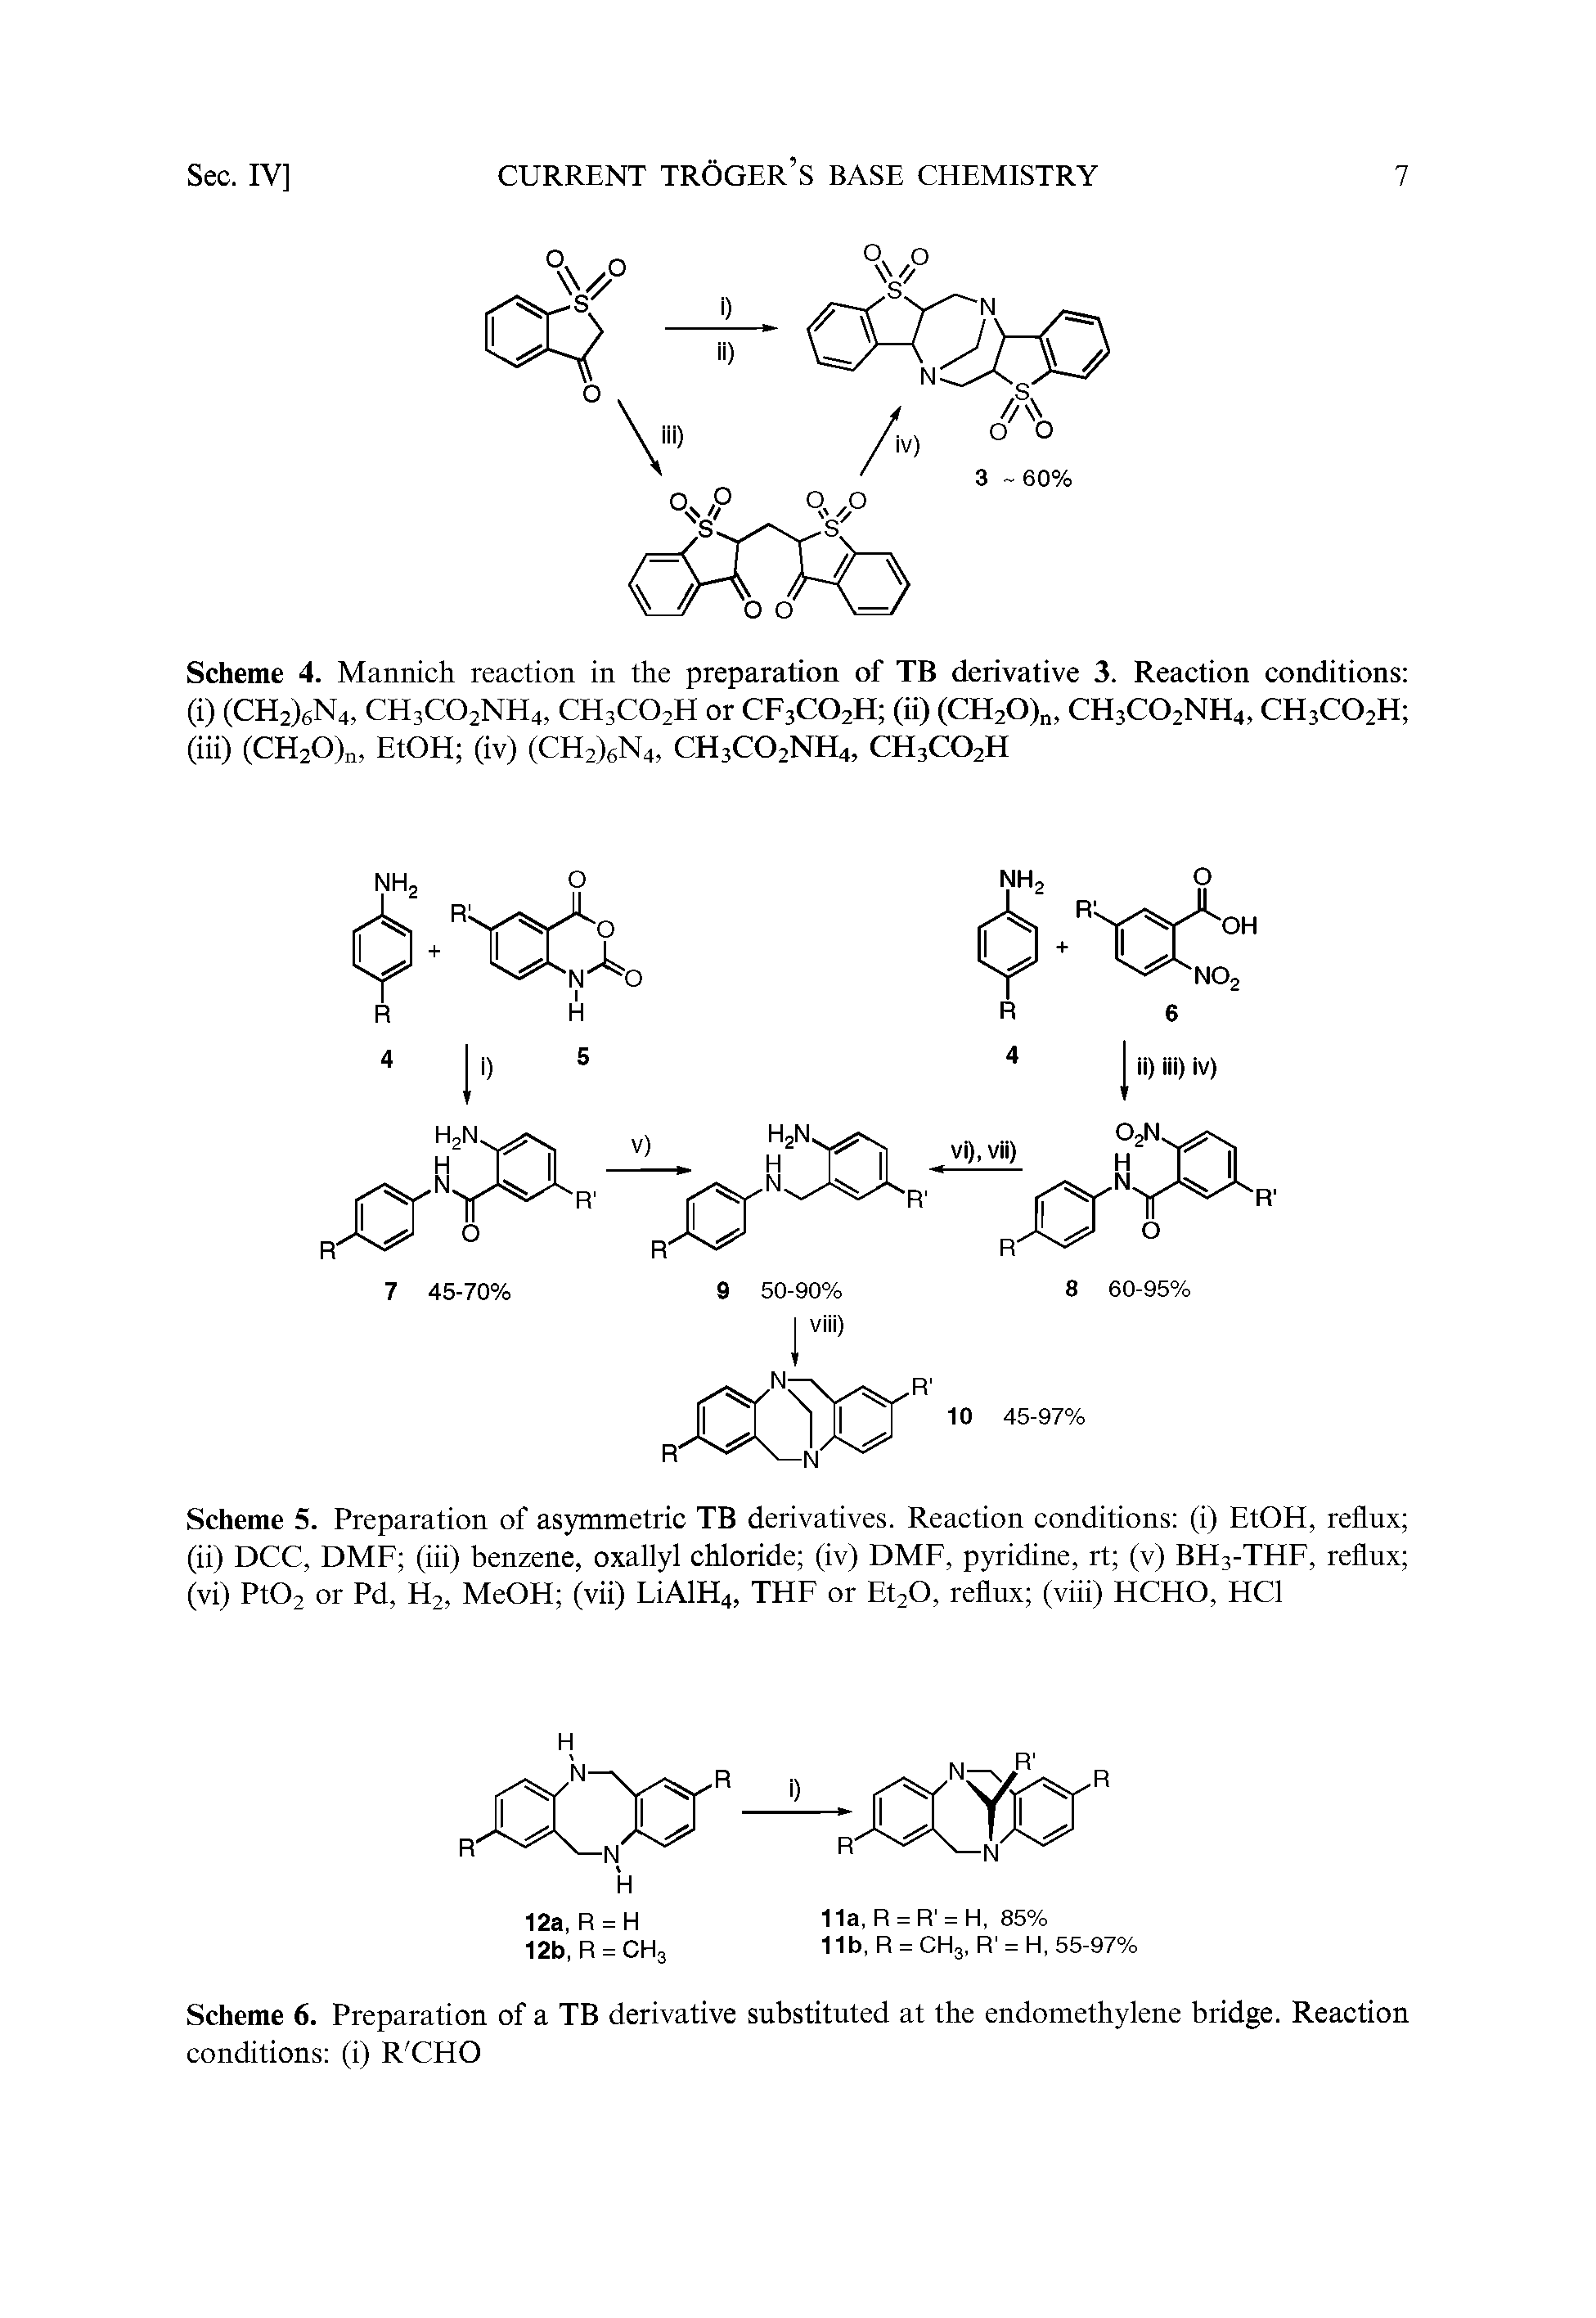 Scheme 5. Preparation of asymmetric TB derivatives. Reaction conditions (i) EtOH, reflux (ii) DCC, DMF (iii) benzene, oxallyl chloride (iv) DMF, pyridine, rt (v) BH3-THF, reflux (vi) Pt02 or Pd, H2, MeOH (vii) LiAlH4, THF or Et20, reflux (viii) HCHO, HC1...